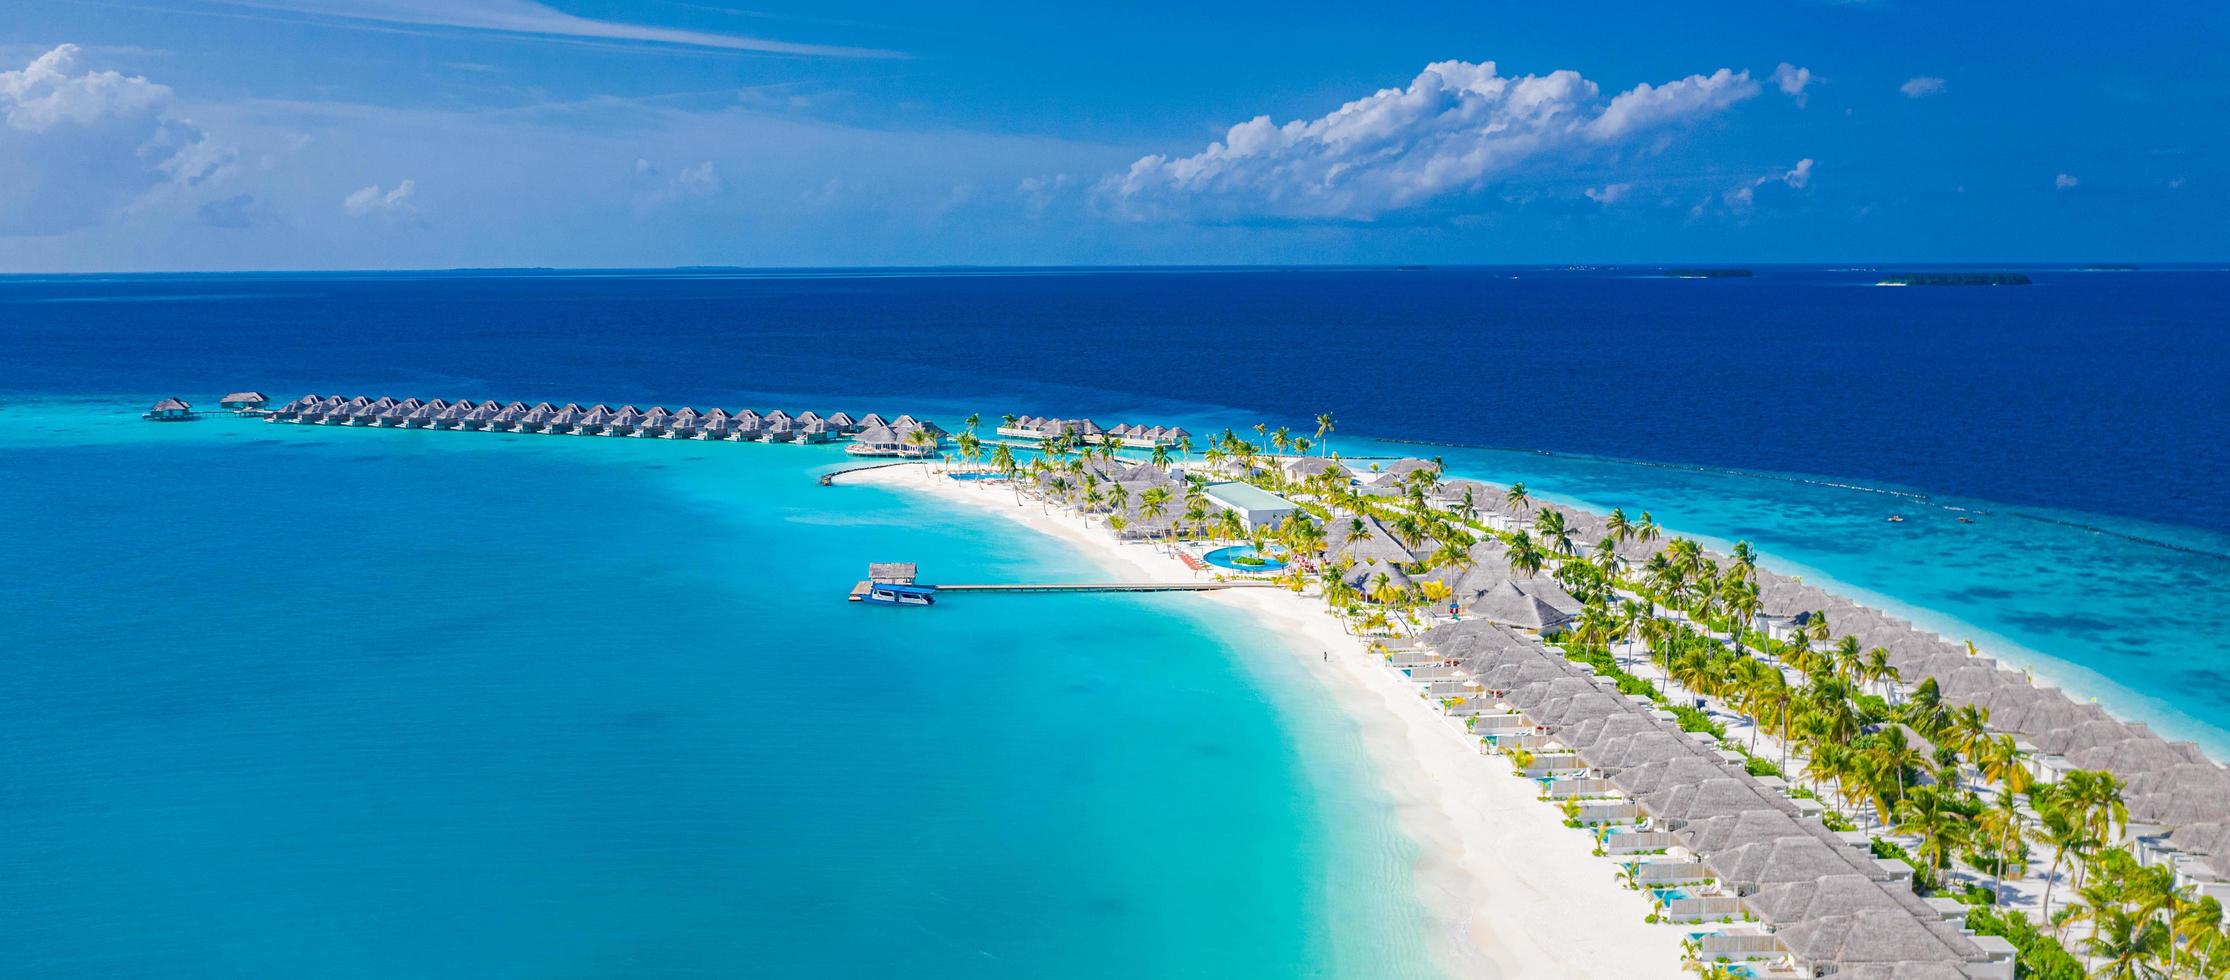 atolón sur de male, maldivas 2019 - vista aérea de la isla, villas de agua foto